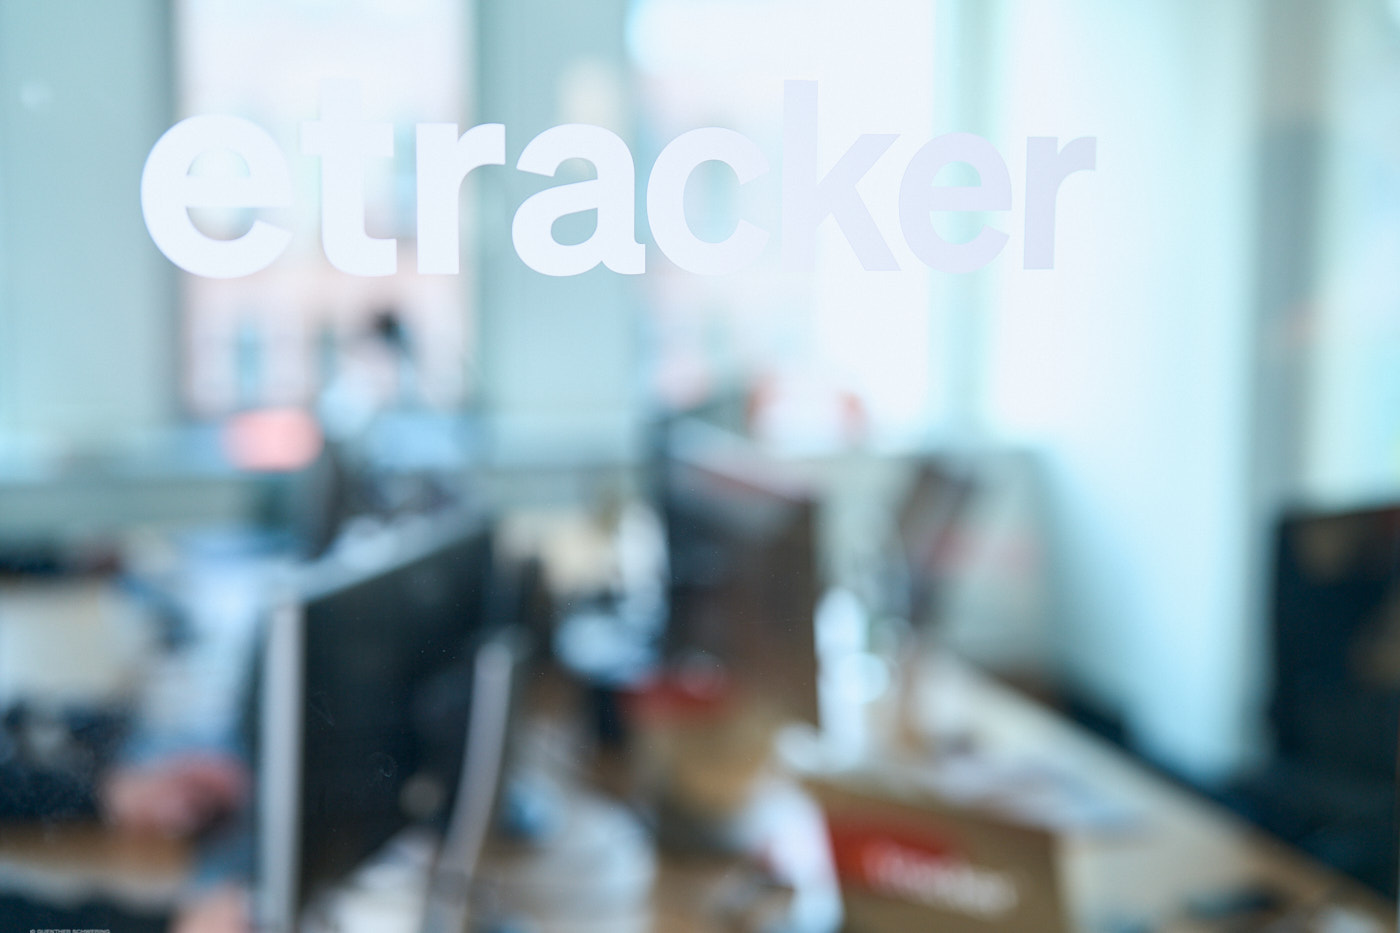 Preview image of website "etracker | Die Google Analytics-Alternative 'Made in Germany'"